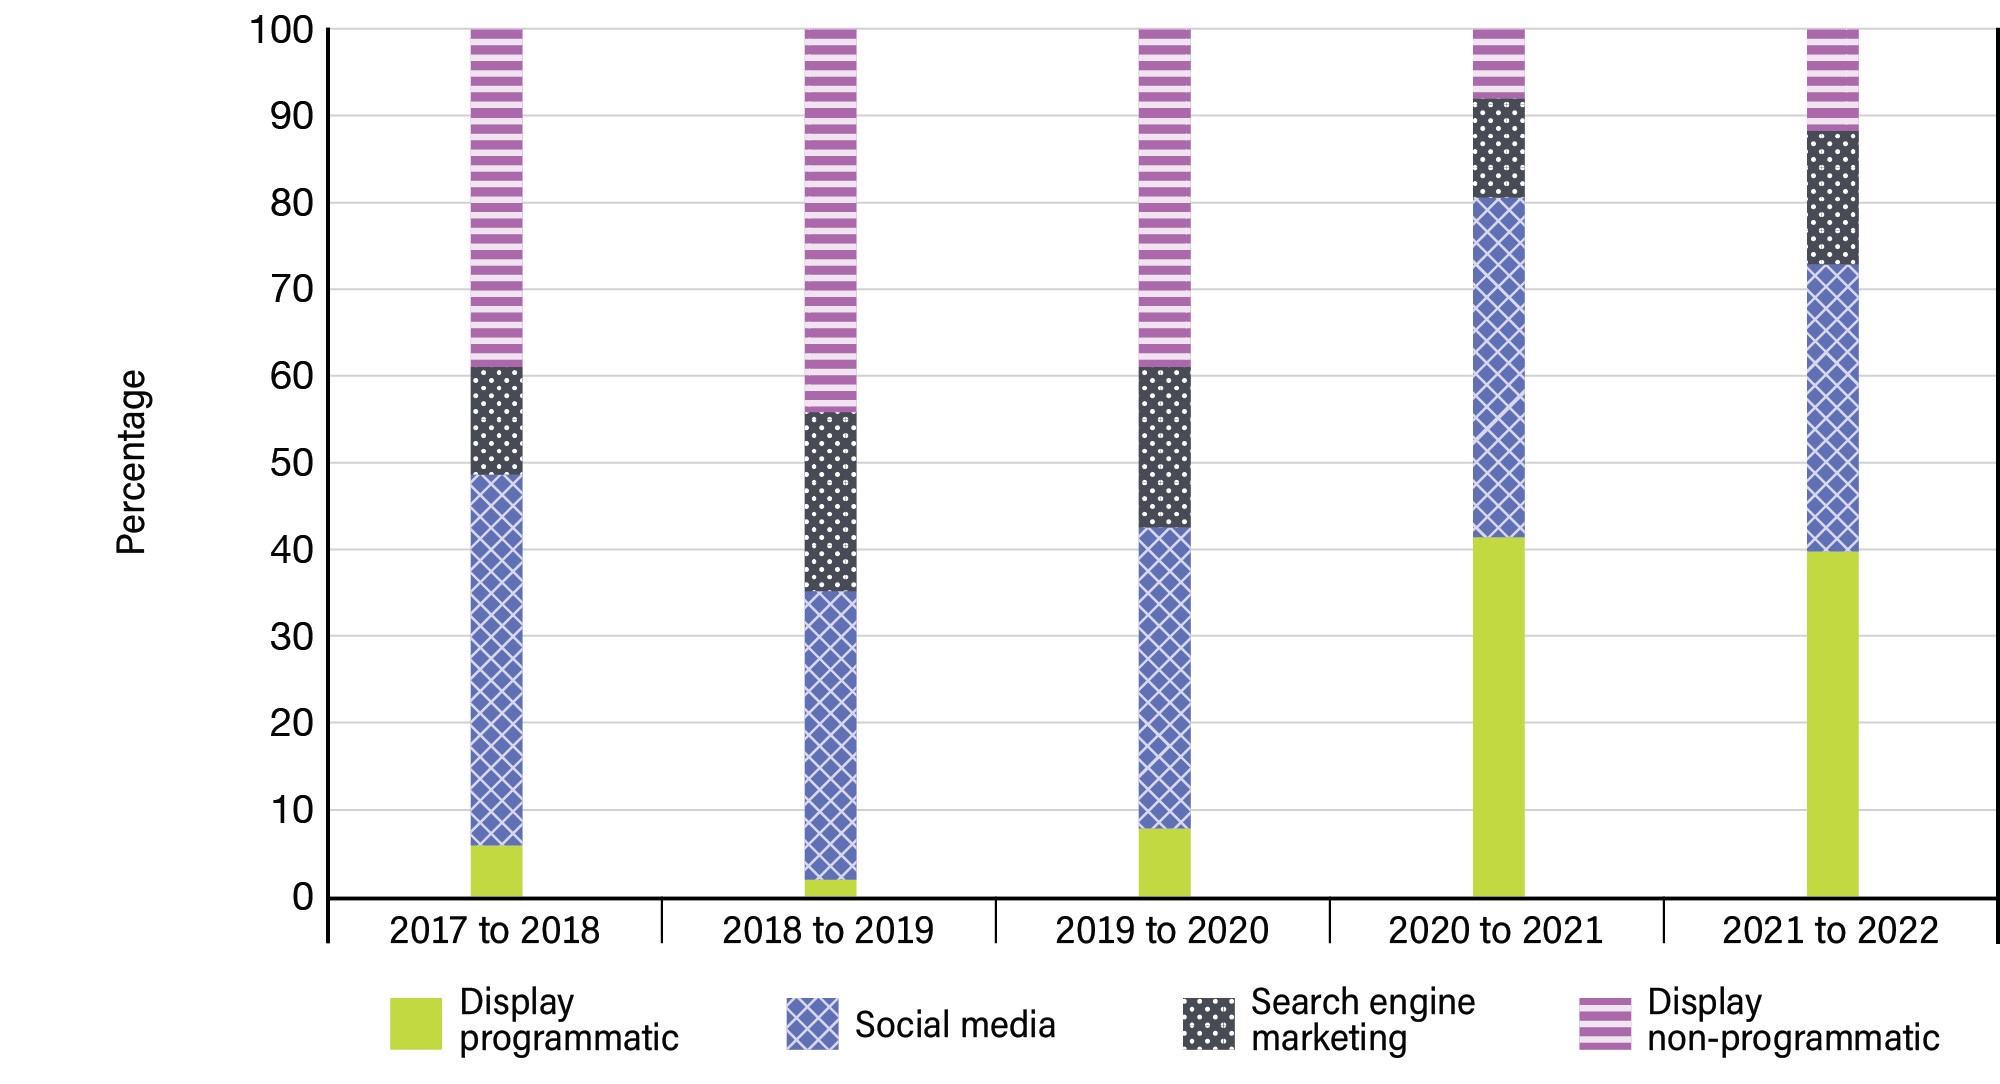 Figure 8: Distribution of digital media expenditures over 5 years - See image description below.